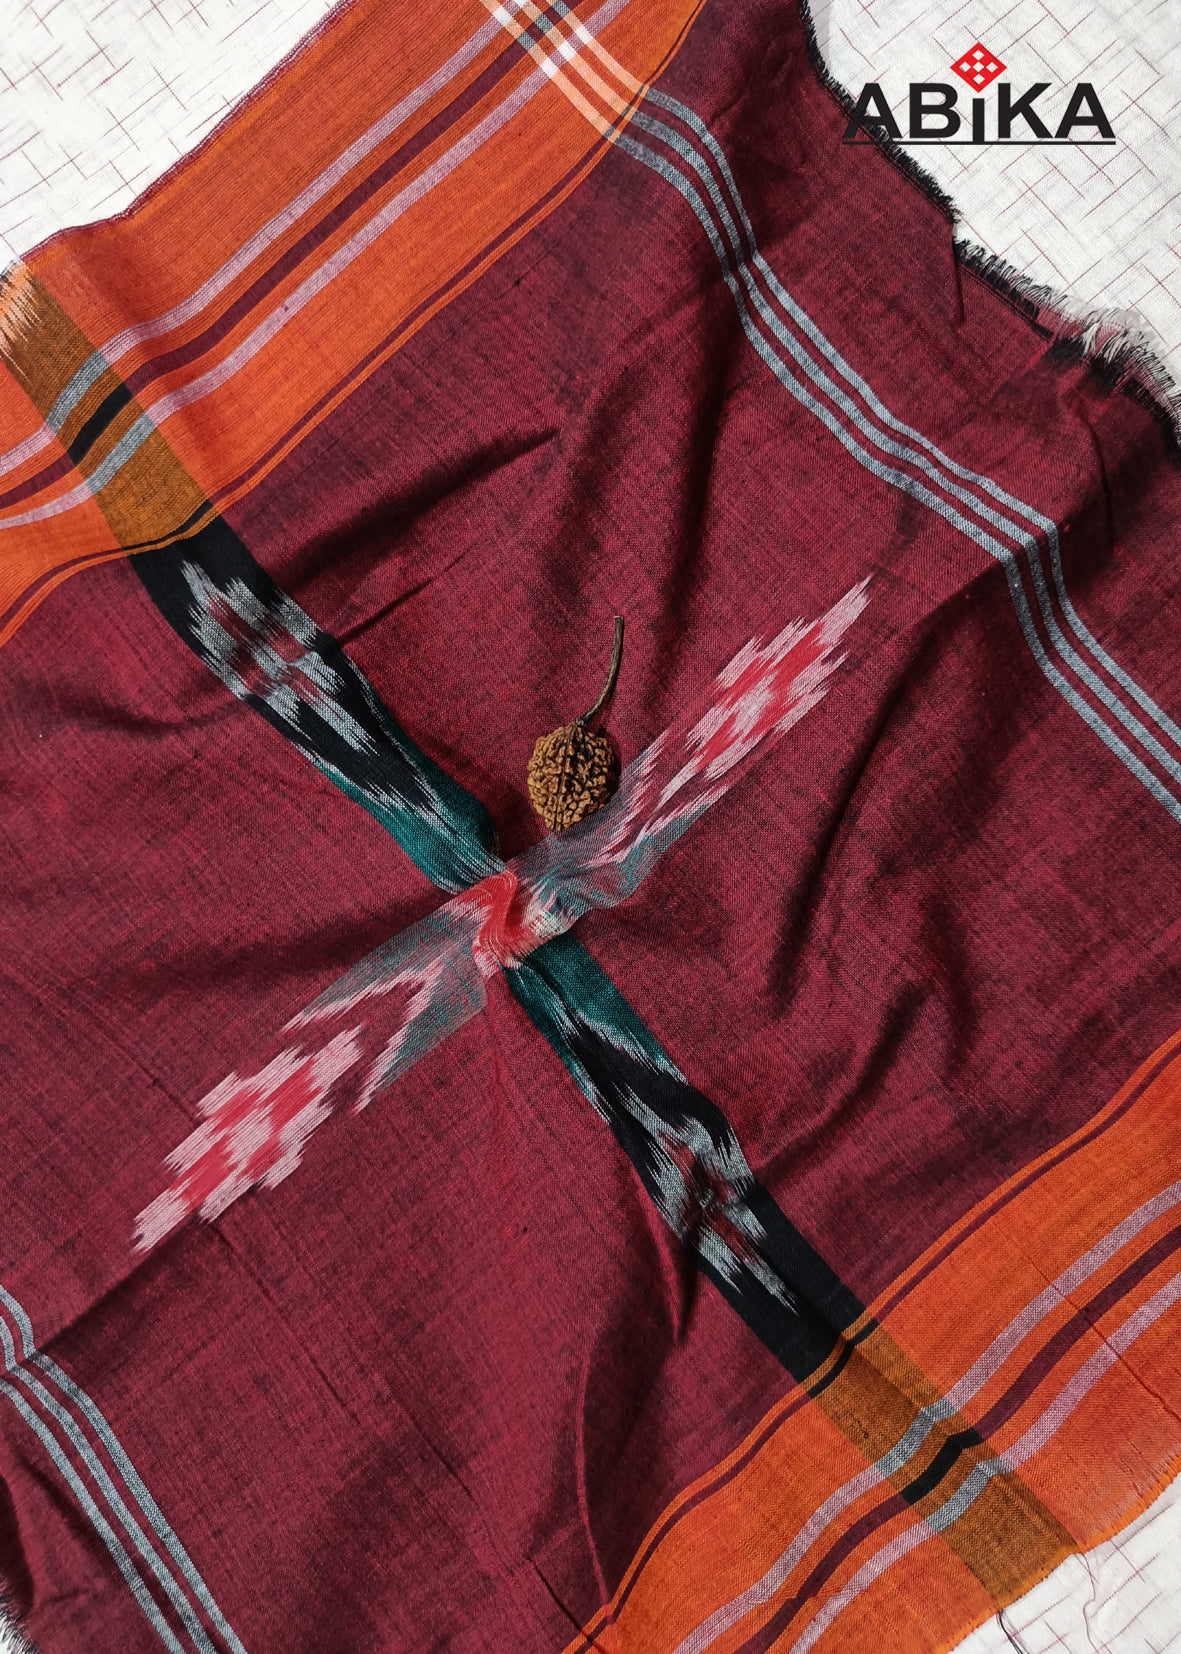 Pasapalli Sambalpuri Cotton Handkerchief/Hankie 3 Numbers/Pieces